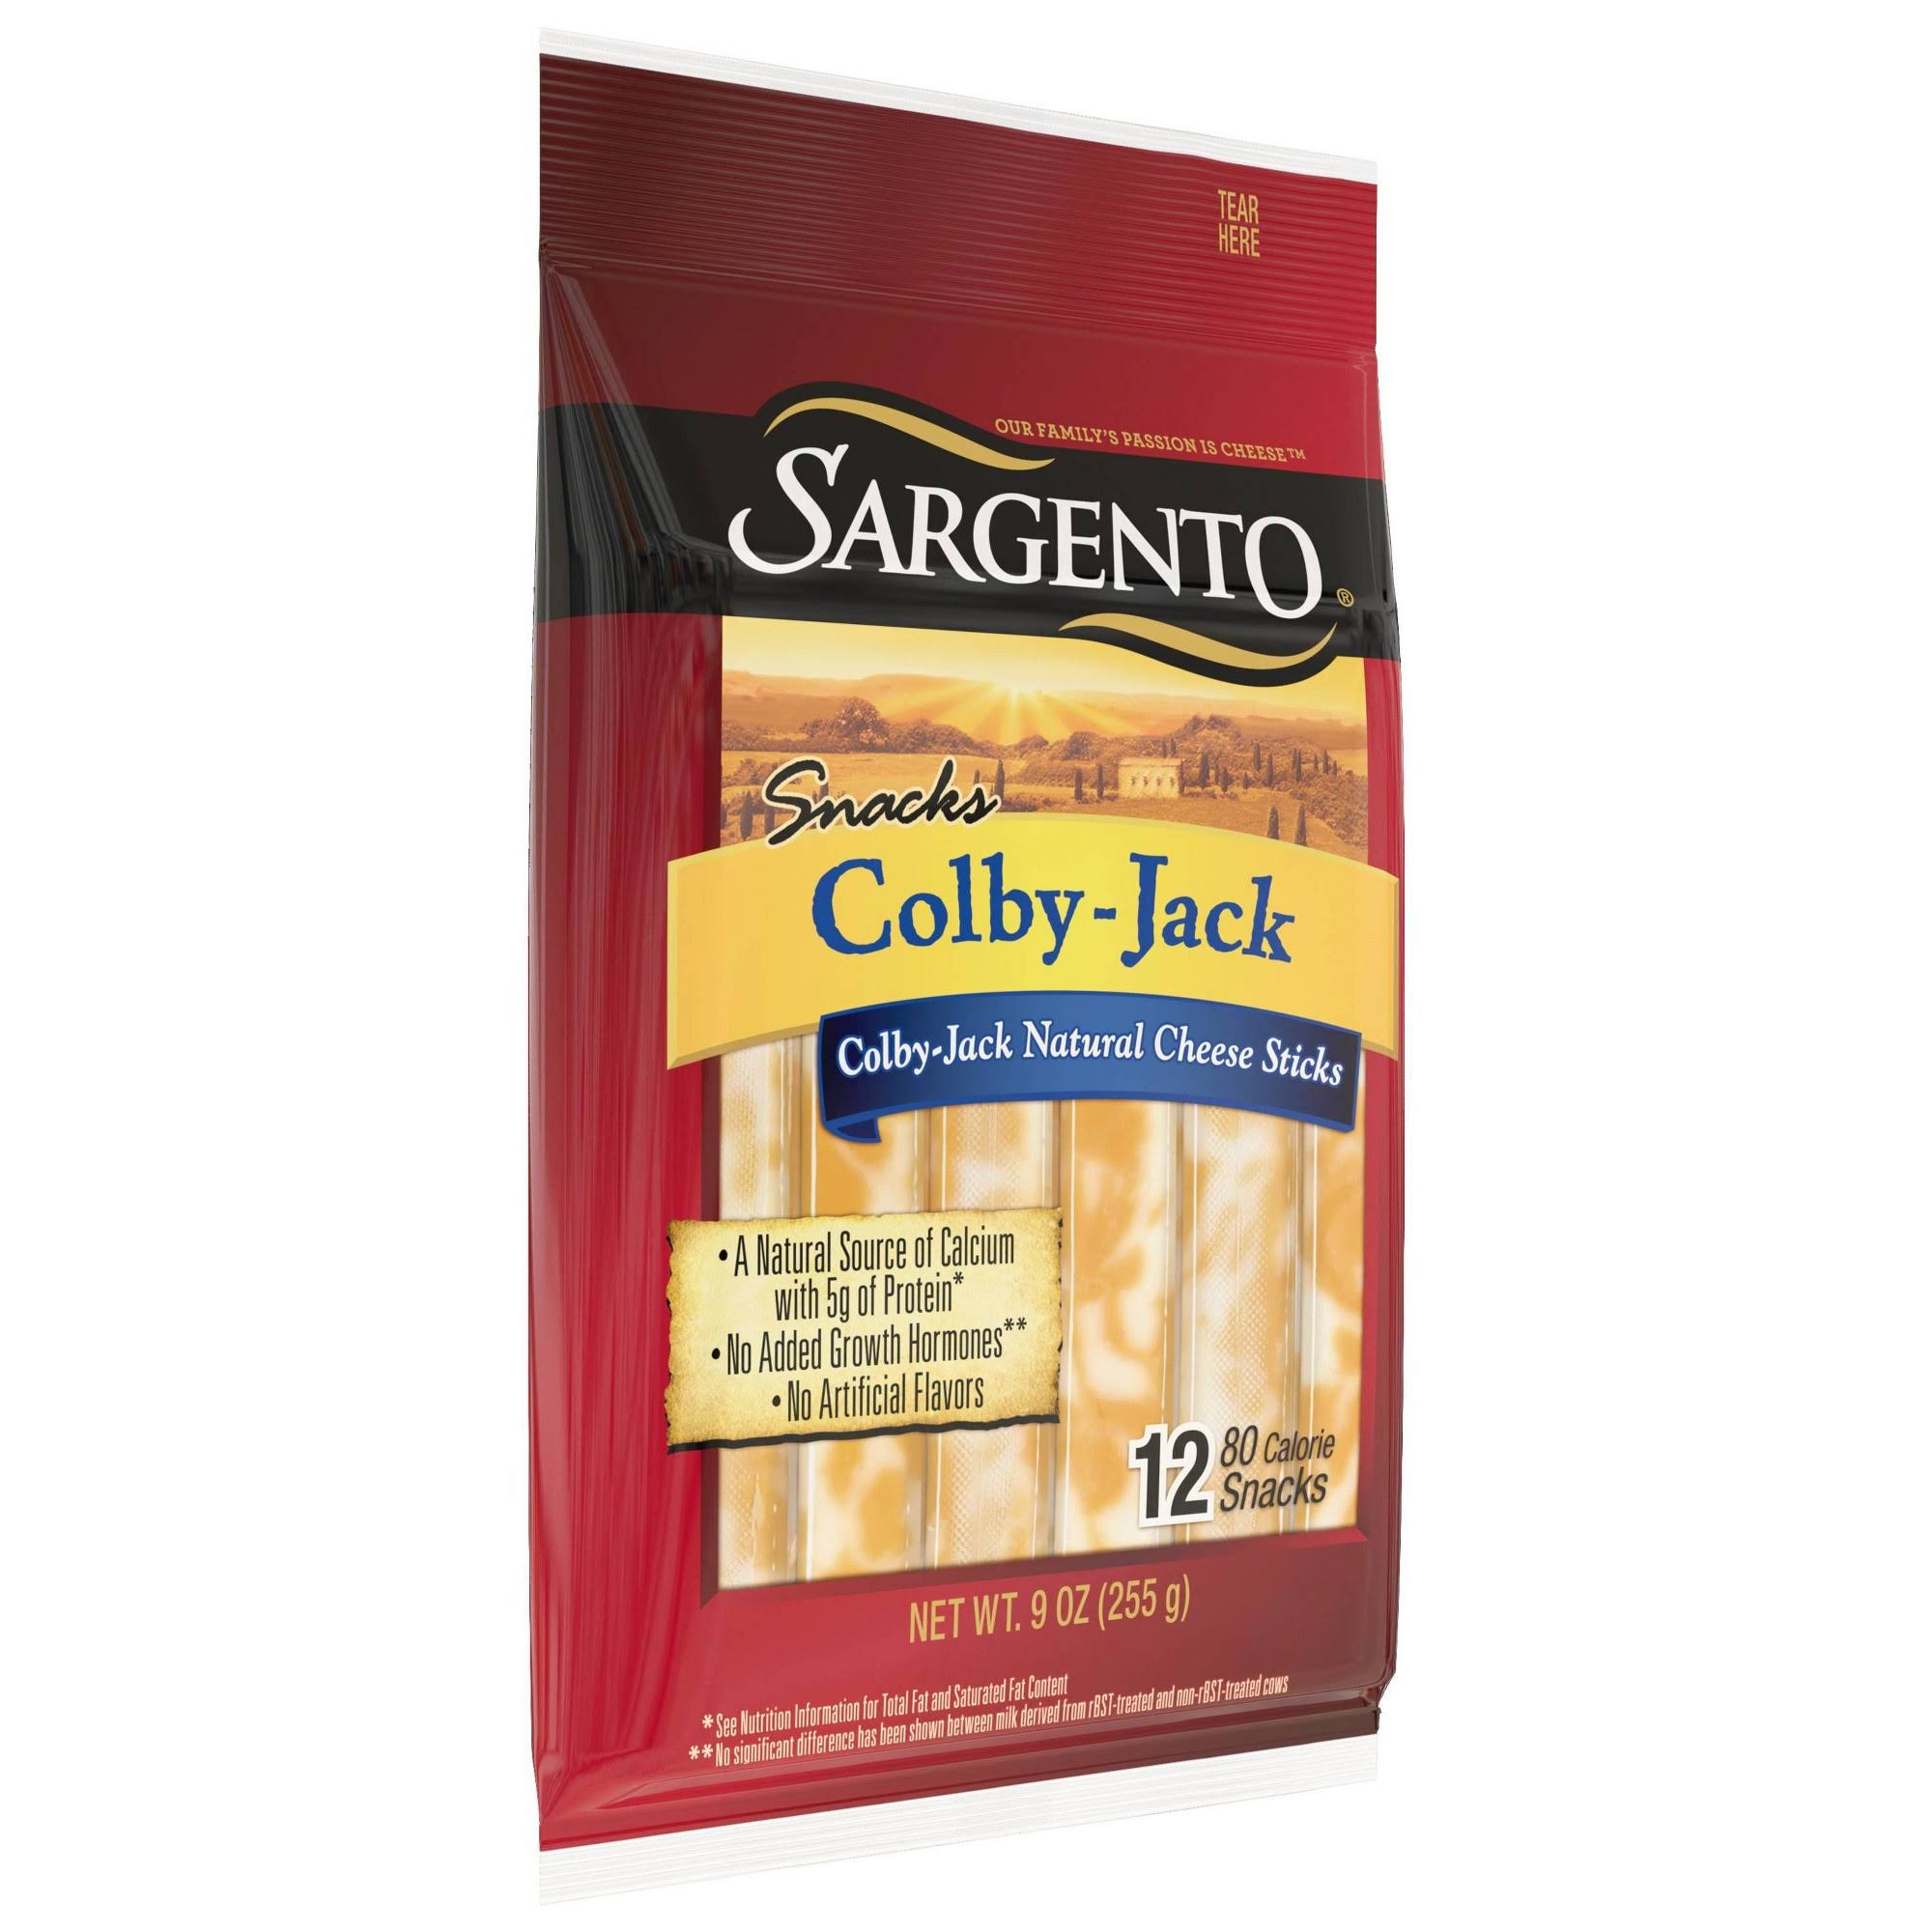 Sargento Cheese Snacks, Colby-Jack - 12 snacks, 9 oz